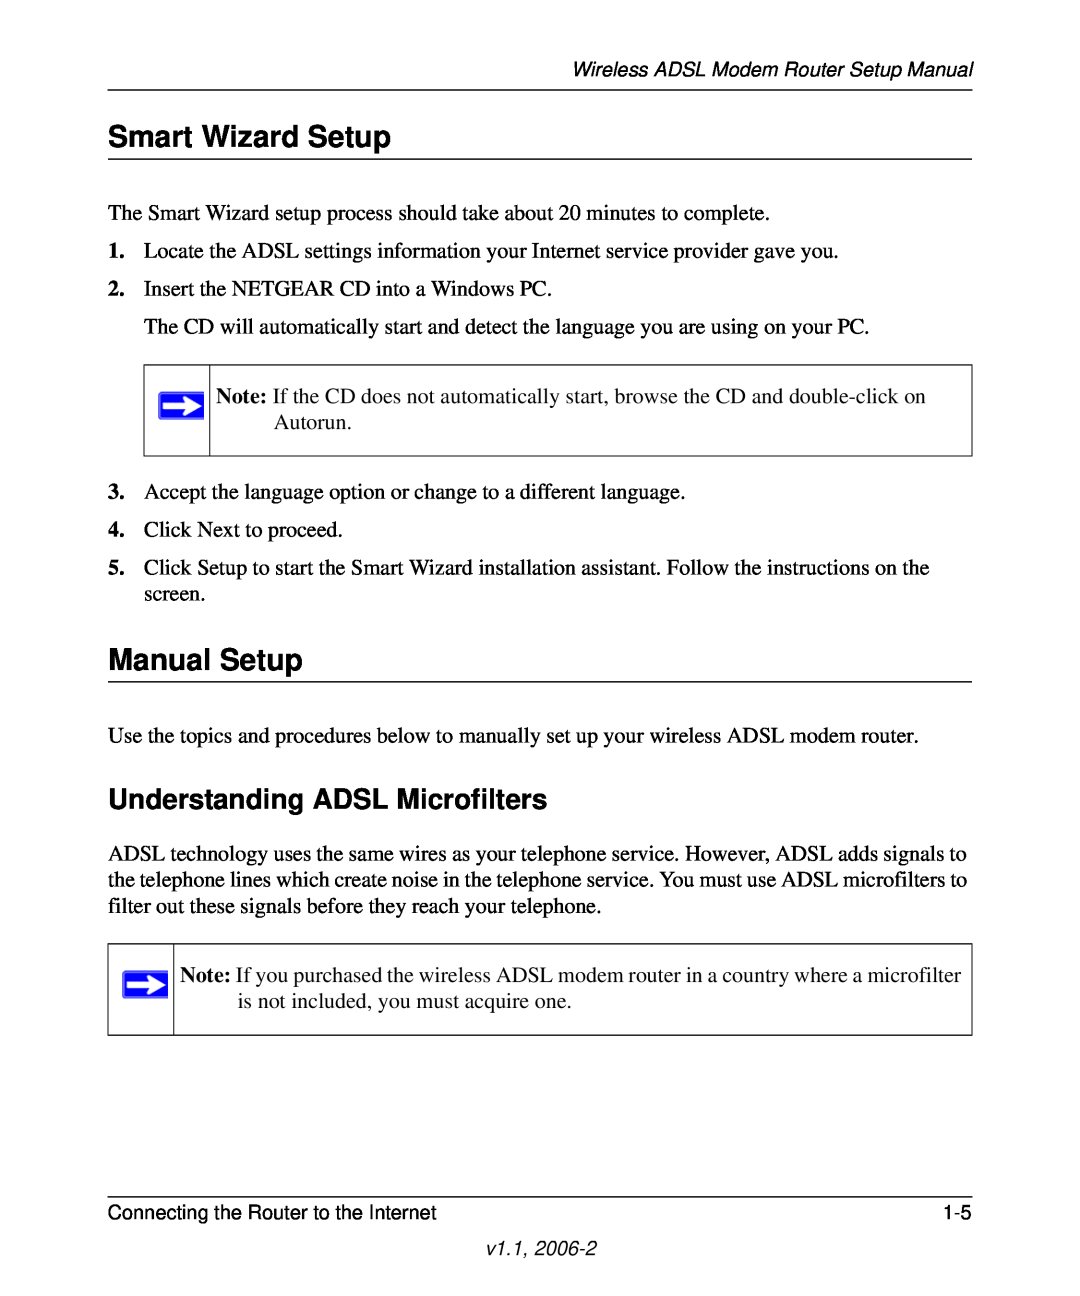 NETGEAR Wireless ADSL Modem Router manual Smart Wizard Setup, Manual Setup, Understanding ADSL Microfilters 